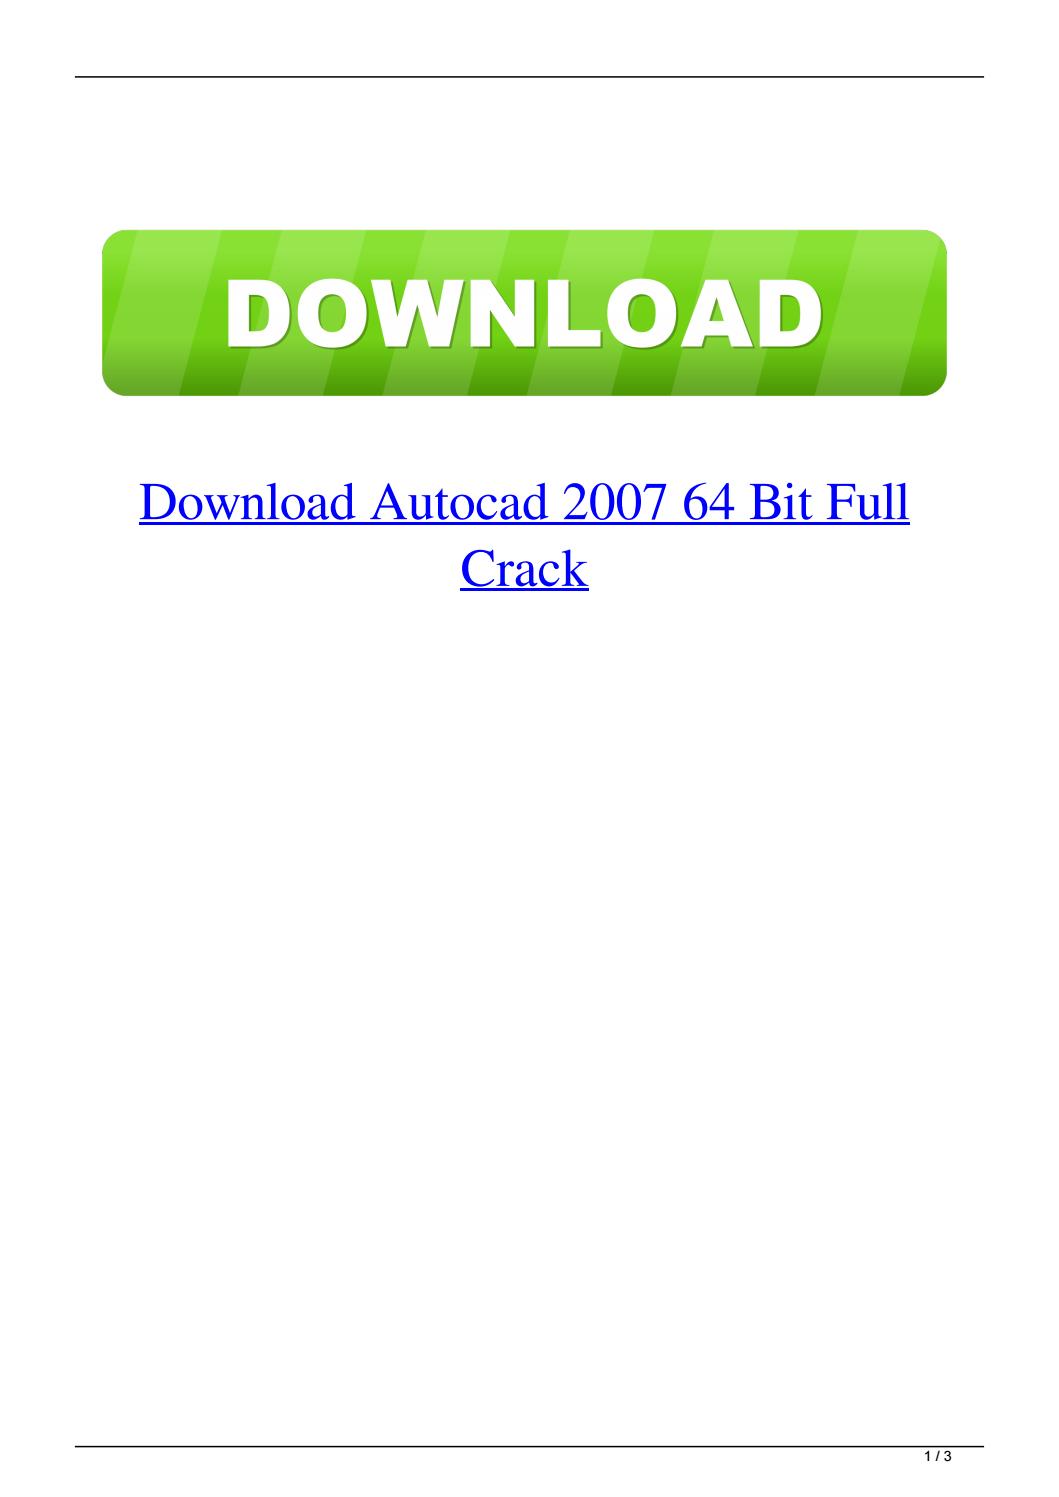 Autocad 2007 64 bit dll crack free